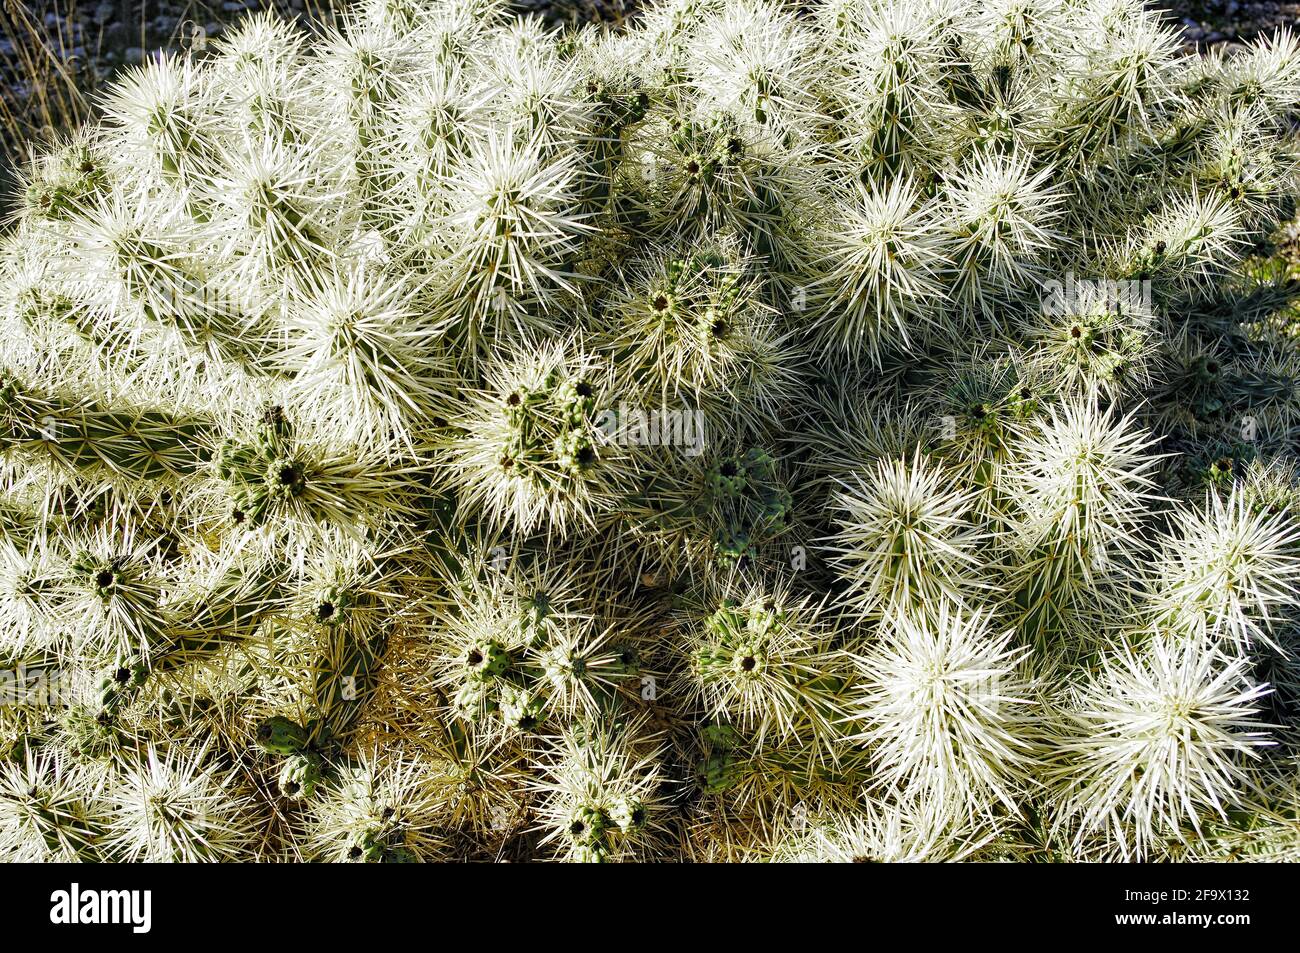 Closeup shot of Cylindropuntia Tunicata cactus with sharp dense thorns Stock Photo